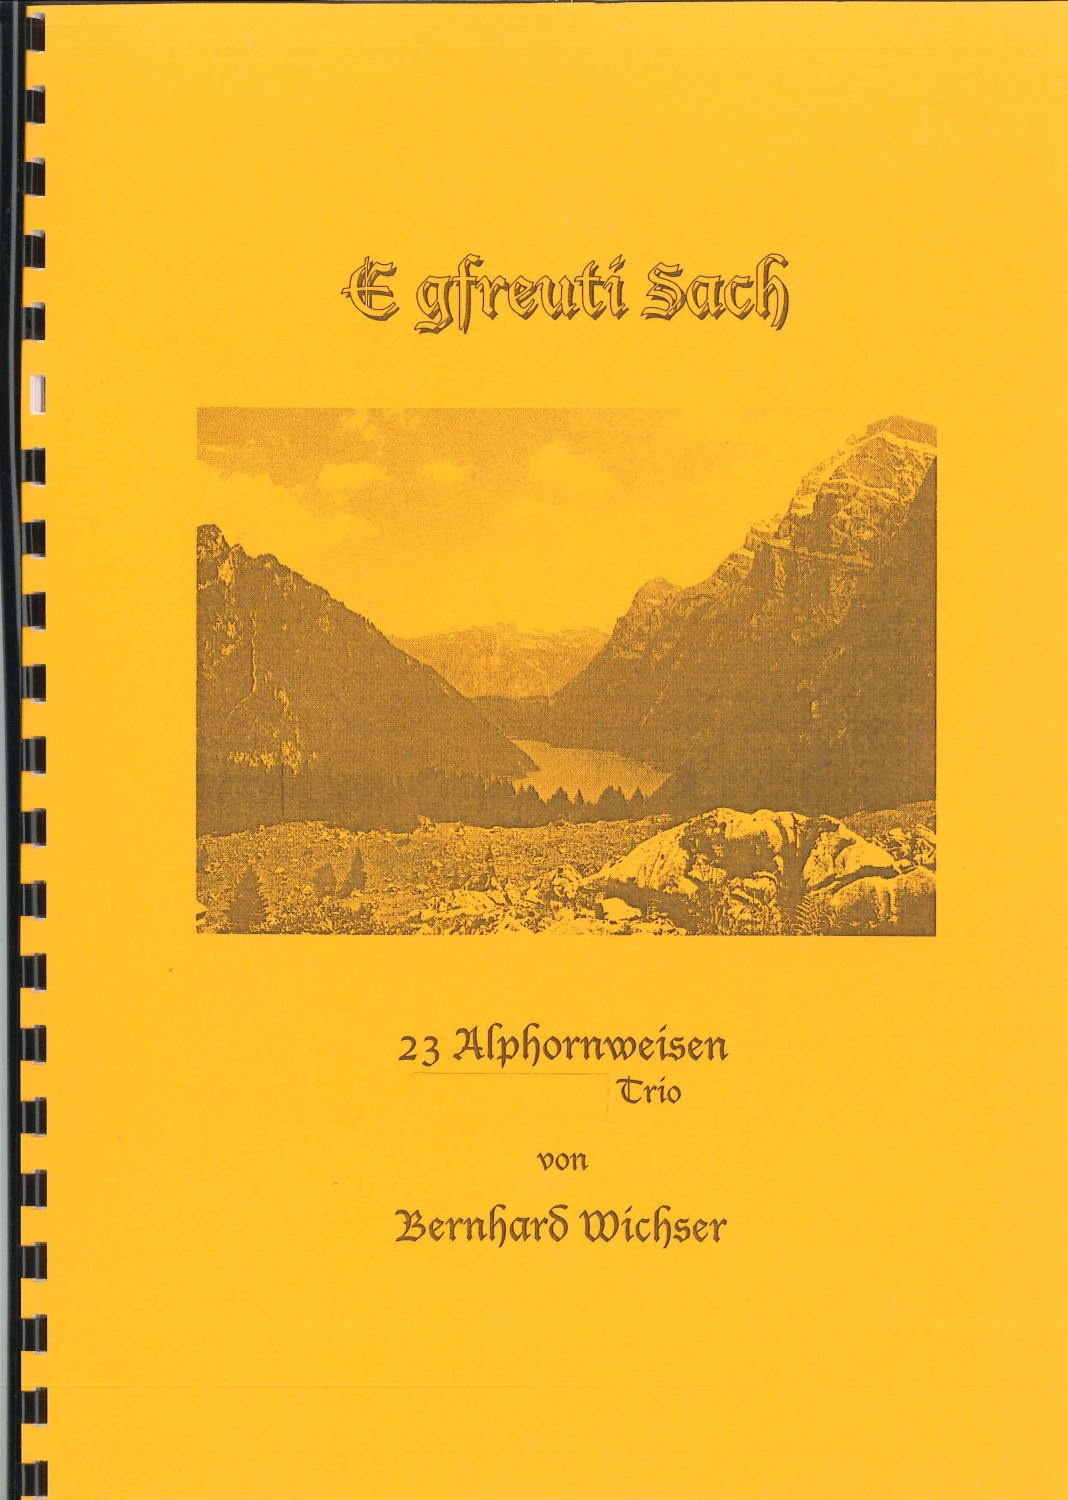 Bernhard-Wichser-E-gfreuti-Sach-3Alph-_0001.JPG